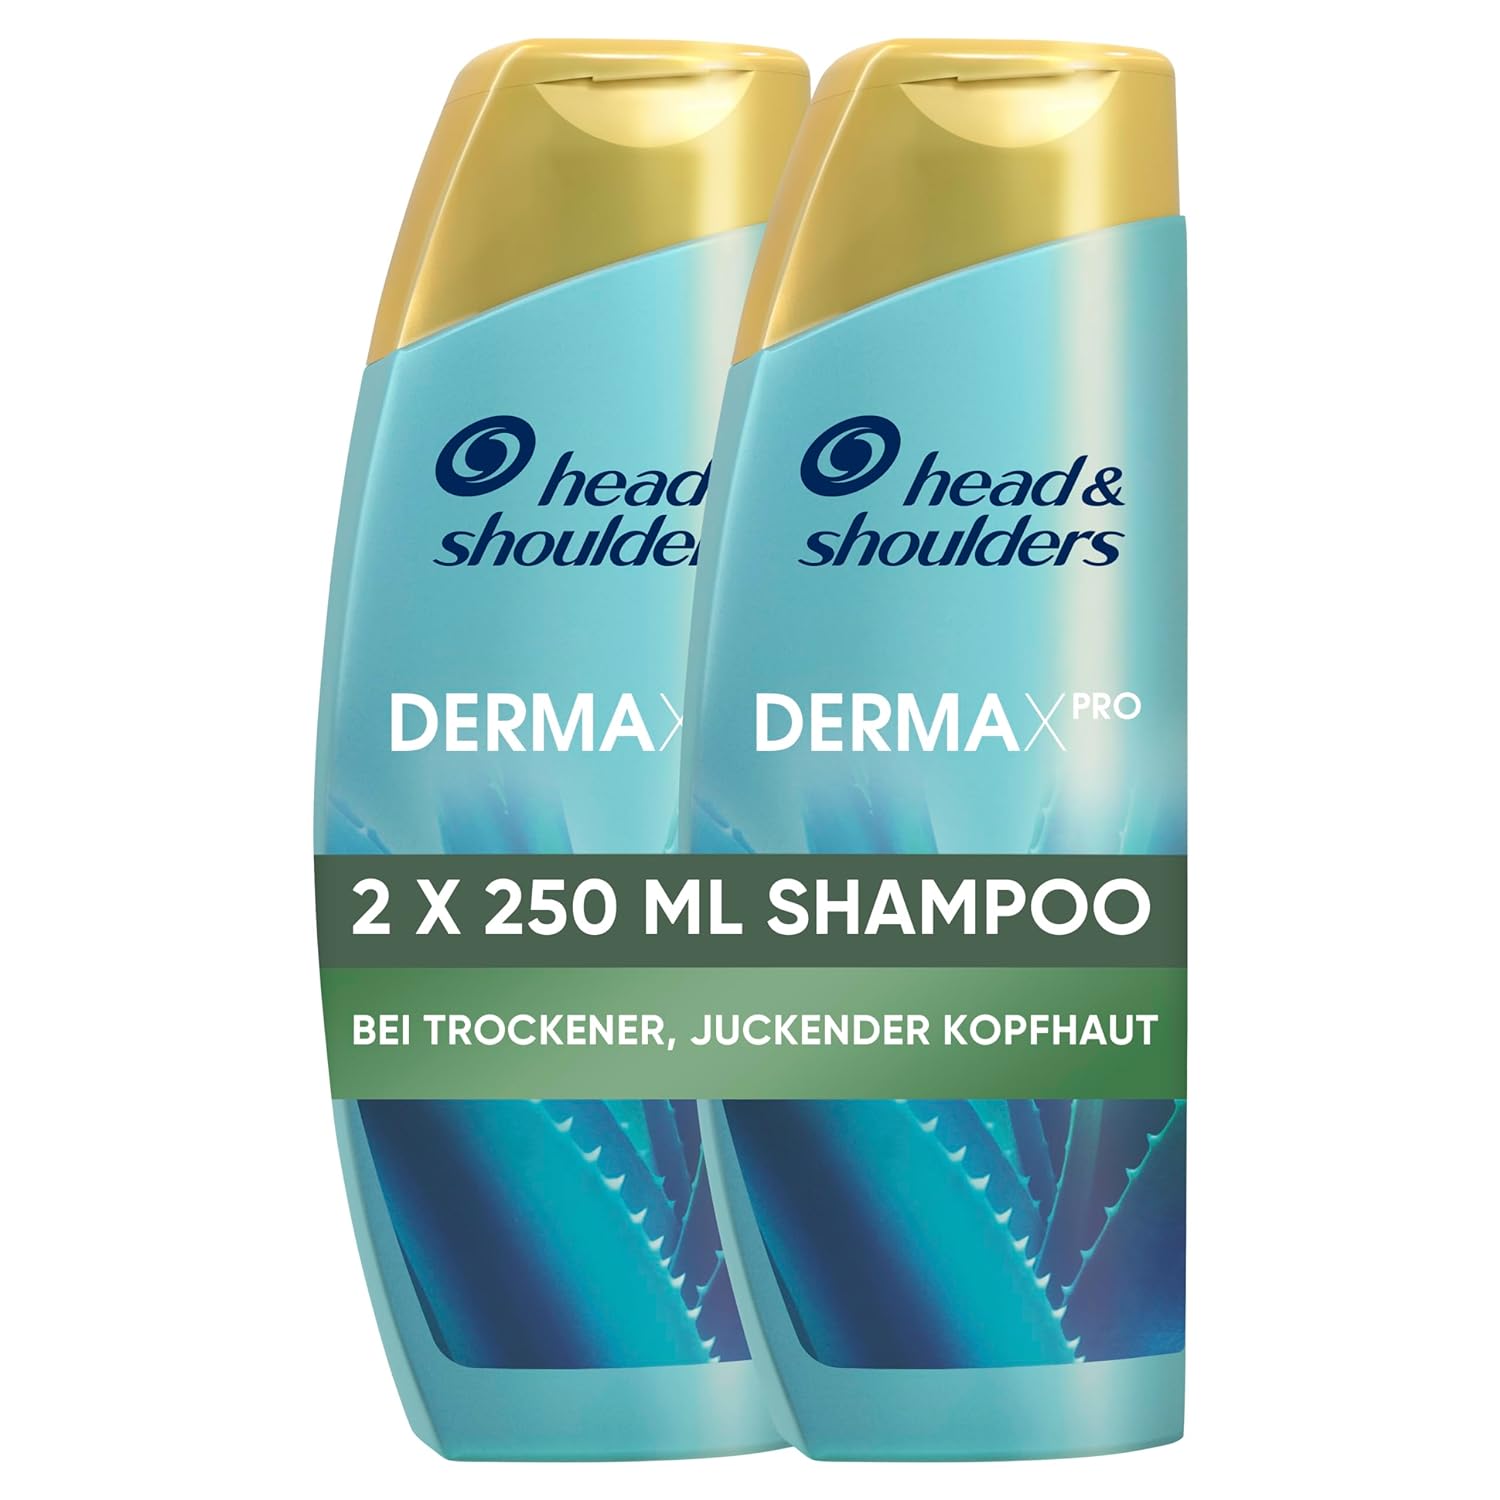 Head & Shoulders DERMAXPRO Soothing Anti-Dandruff Shampoo & Scalp Care